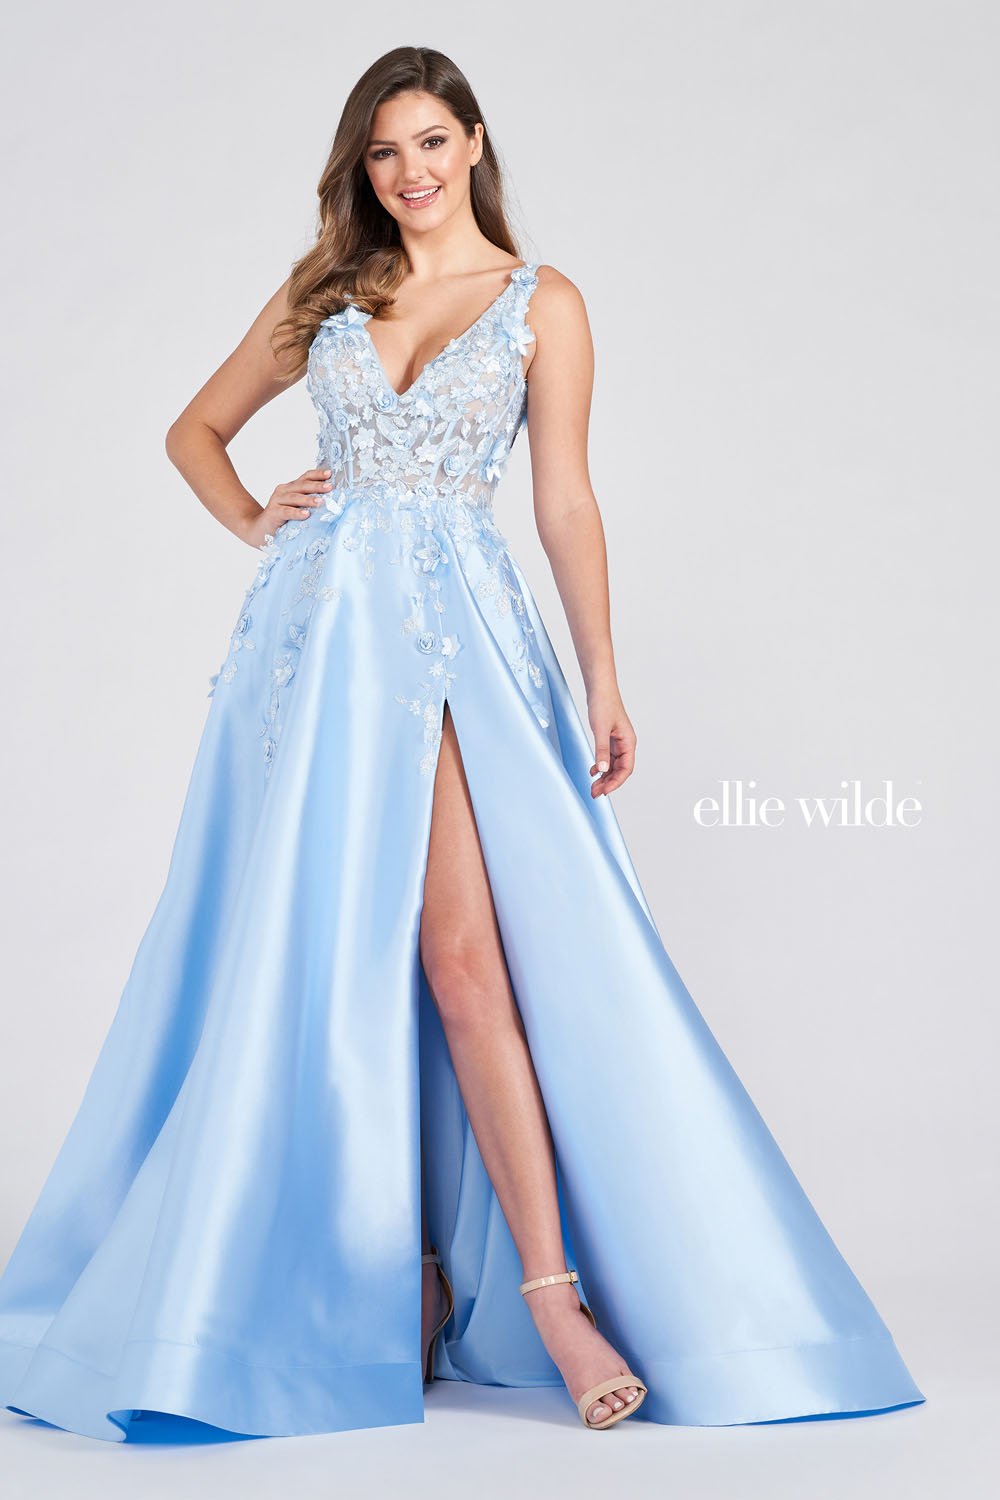 Ellie Wilde Light Blue EW122036 Prom Dress Image.  Light Blue formal dress.